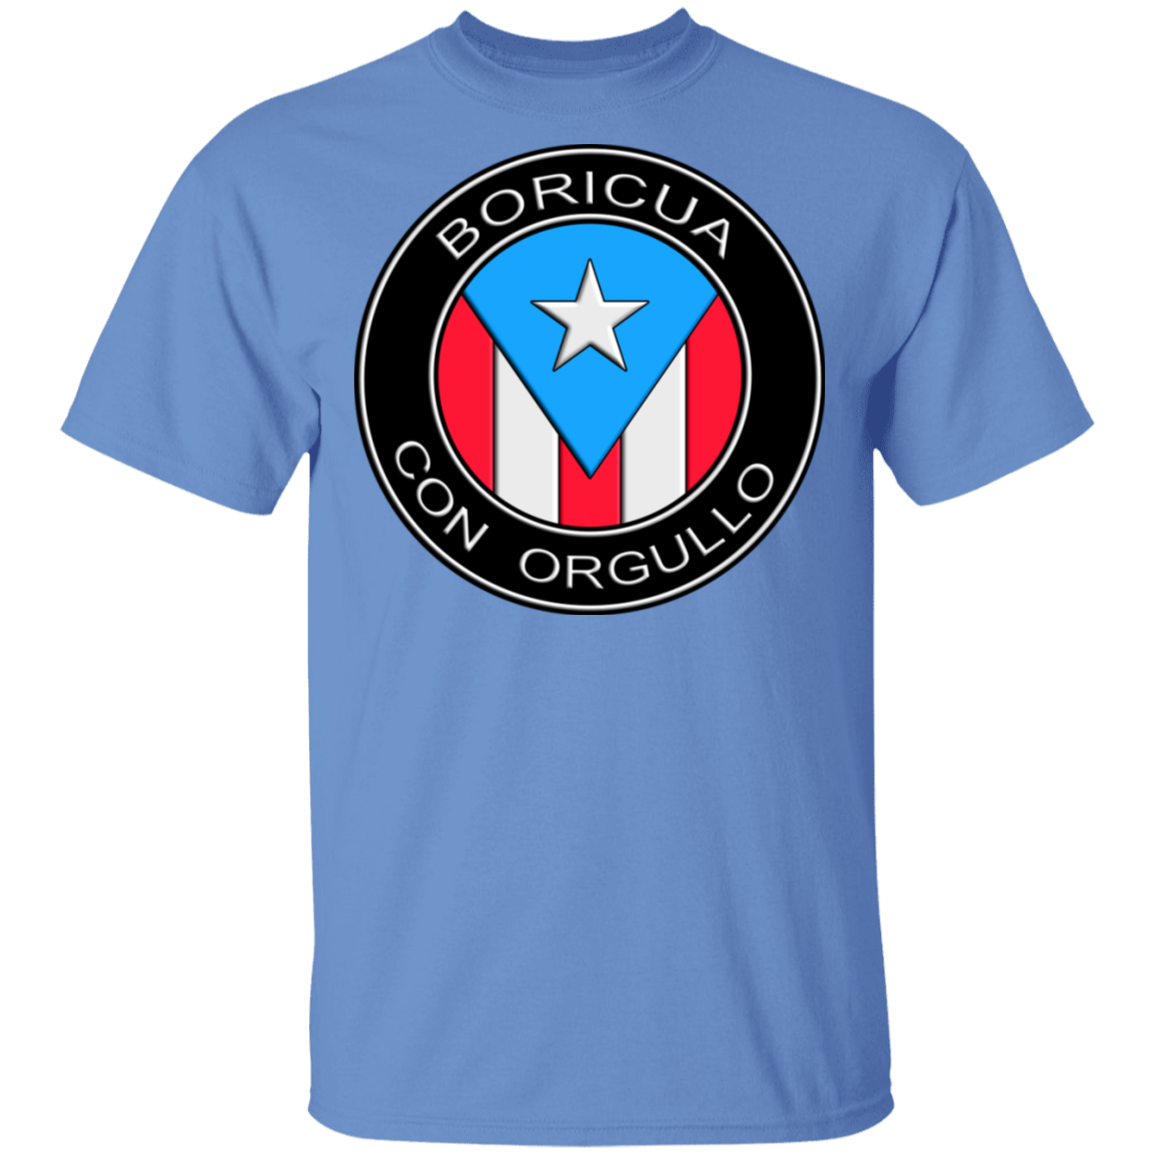 Boricu Con Orgullo 5.3 oz. T-Shirt - Puerto Rican Pride